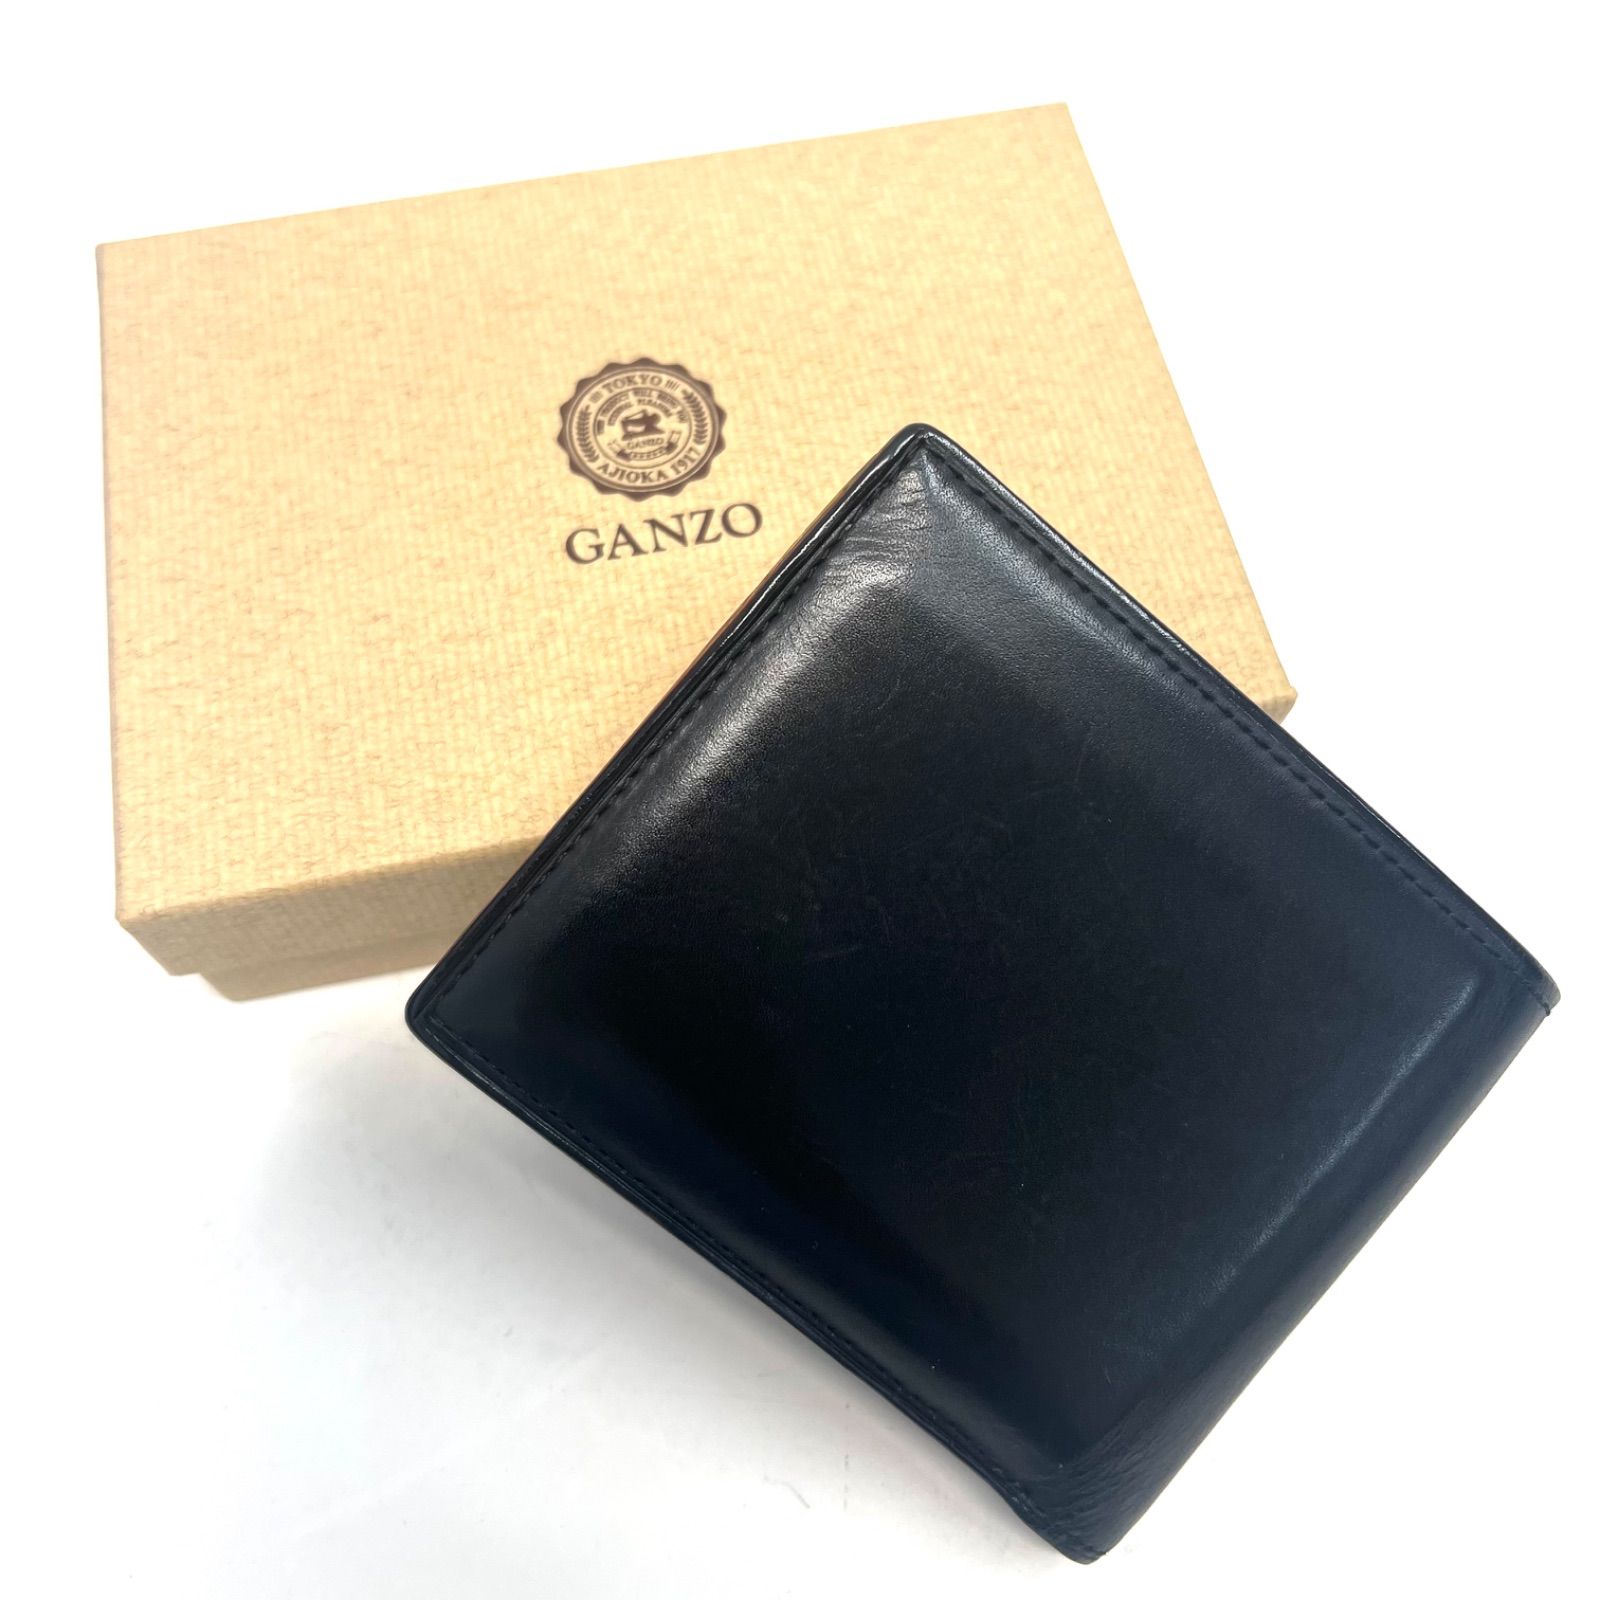 GANZO ガンゾ 折り財布 二つ折り レザー ブラック×イエロー メンズ 